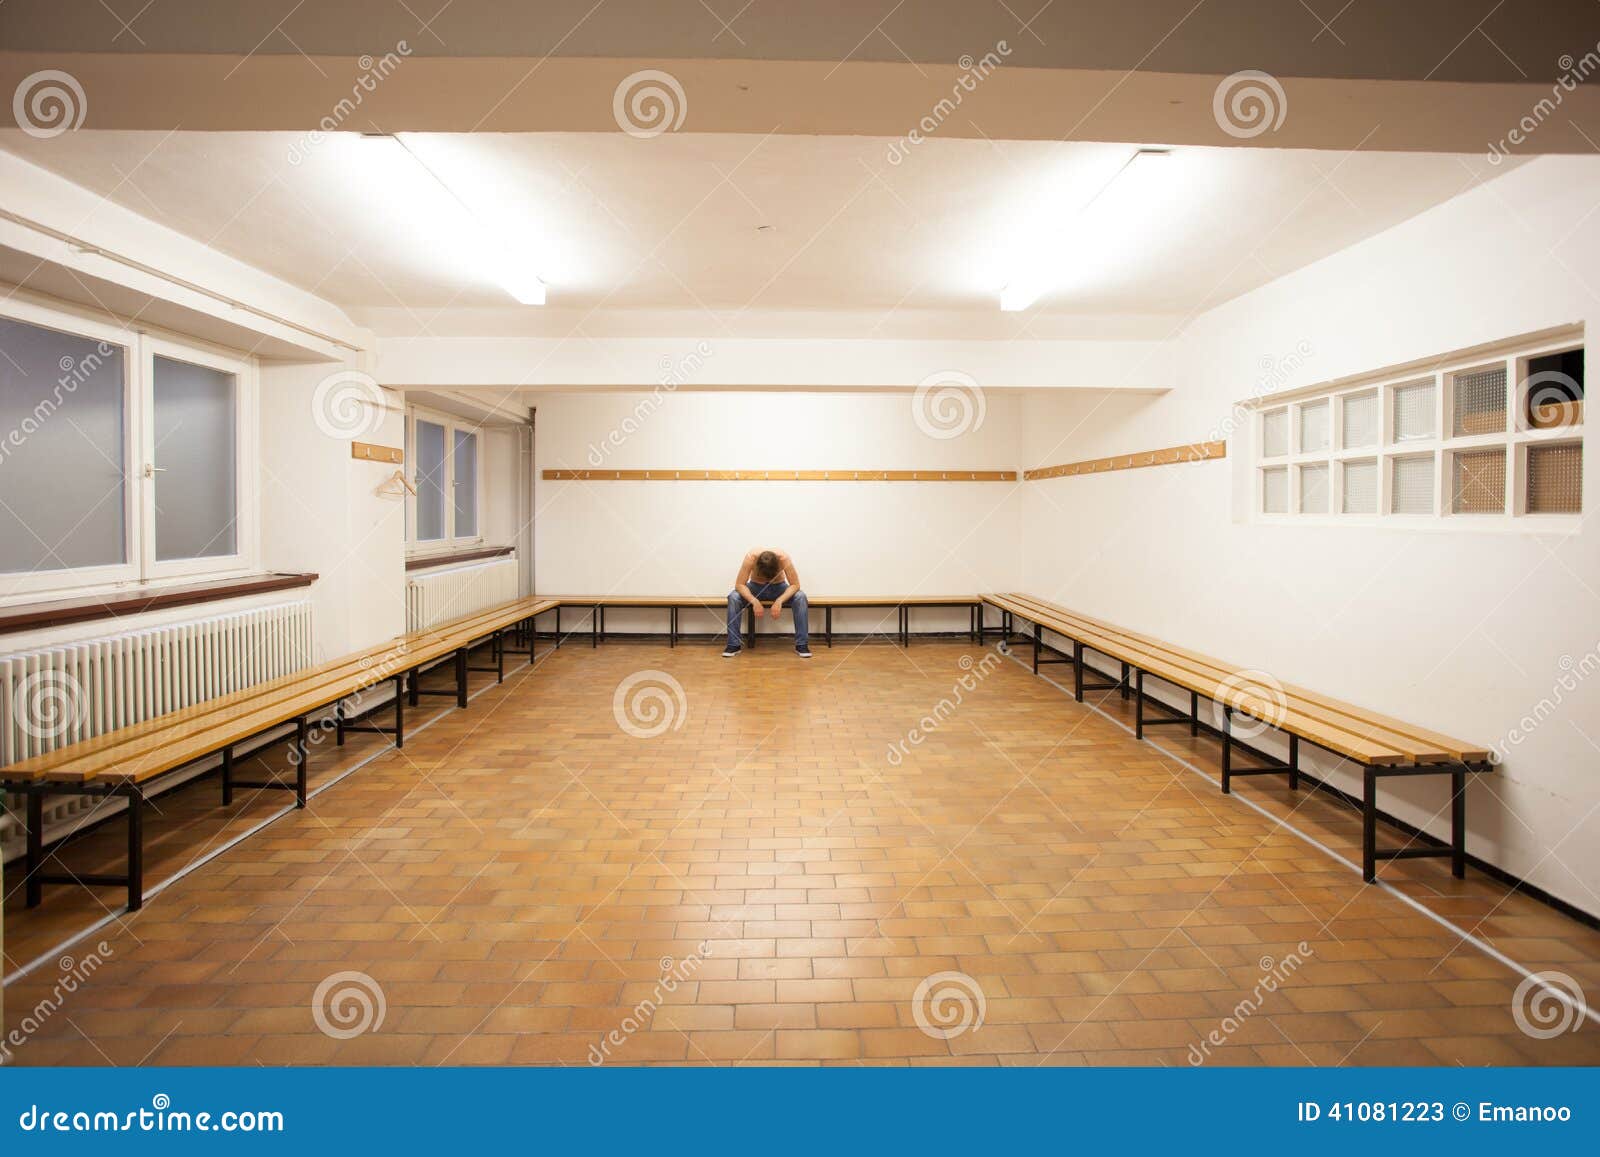 man-sitting-empty-locker-room-old-410812